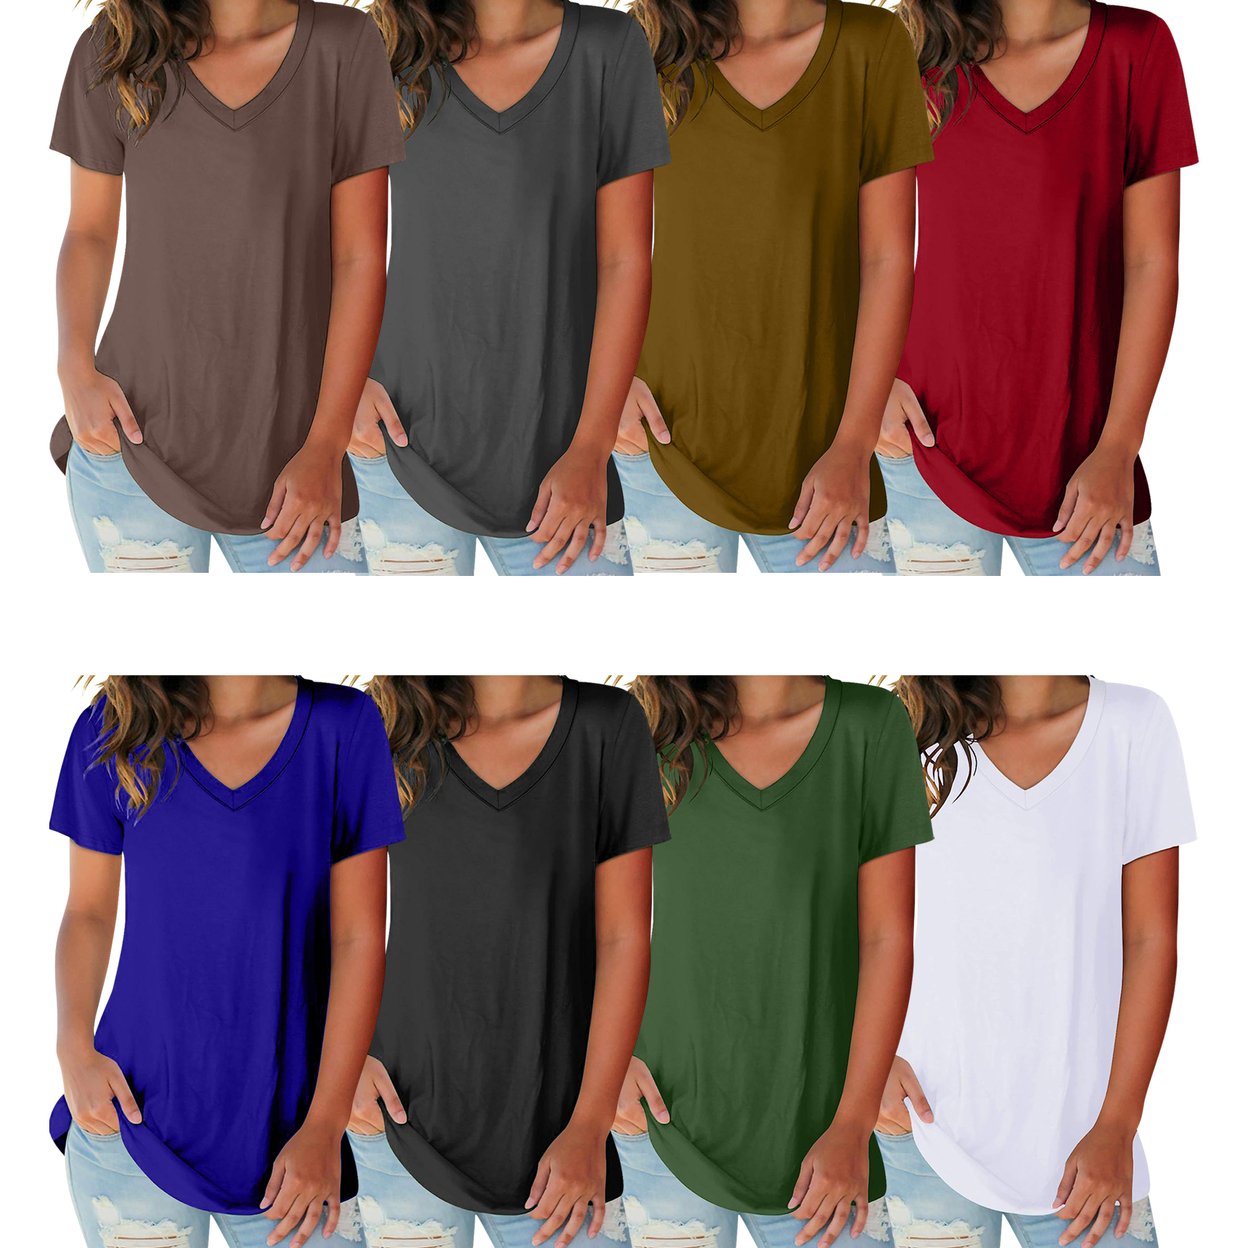 Women's Ultra-Soft Smooth Cotton Blend Basic V-Neck Short Sleeve Shirts - Mustard, Small